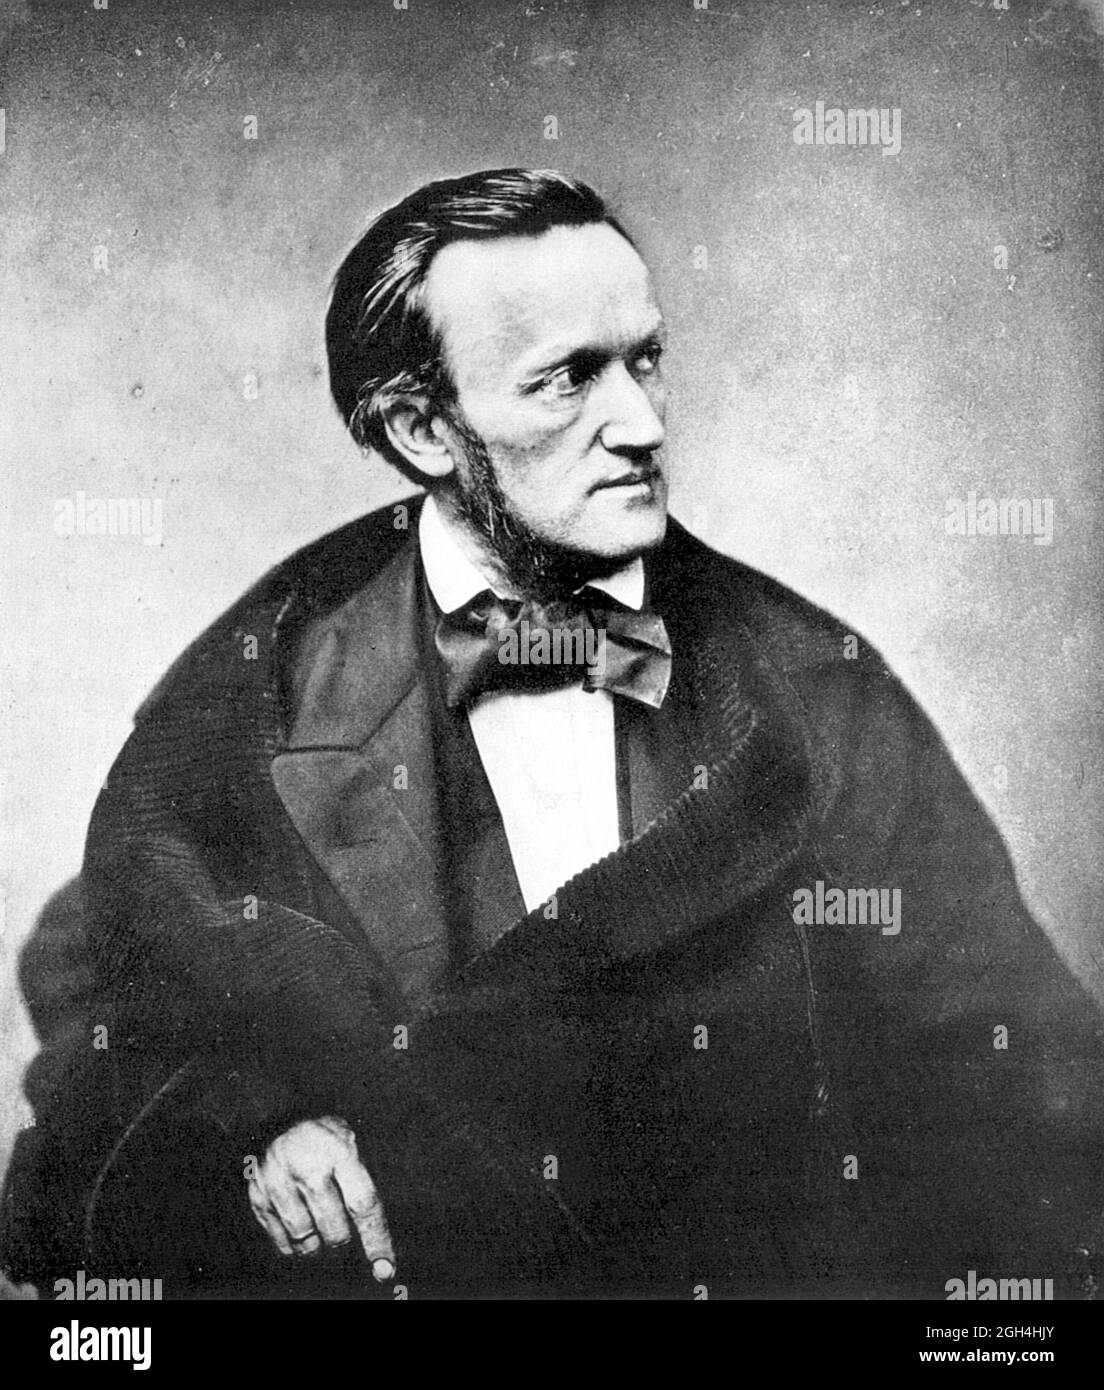 Vintage Photographic Portrait - Richard Wagner Stock Photo